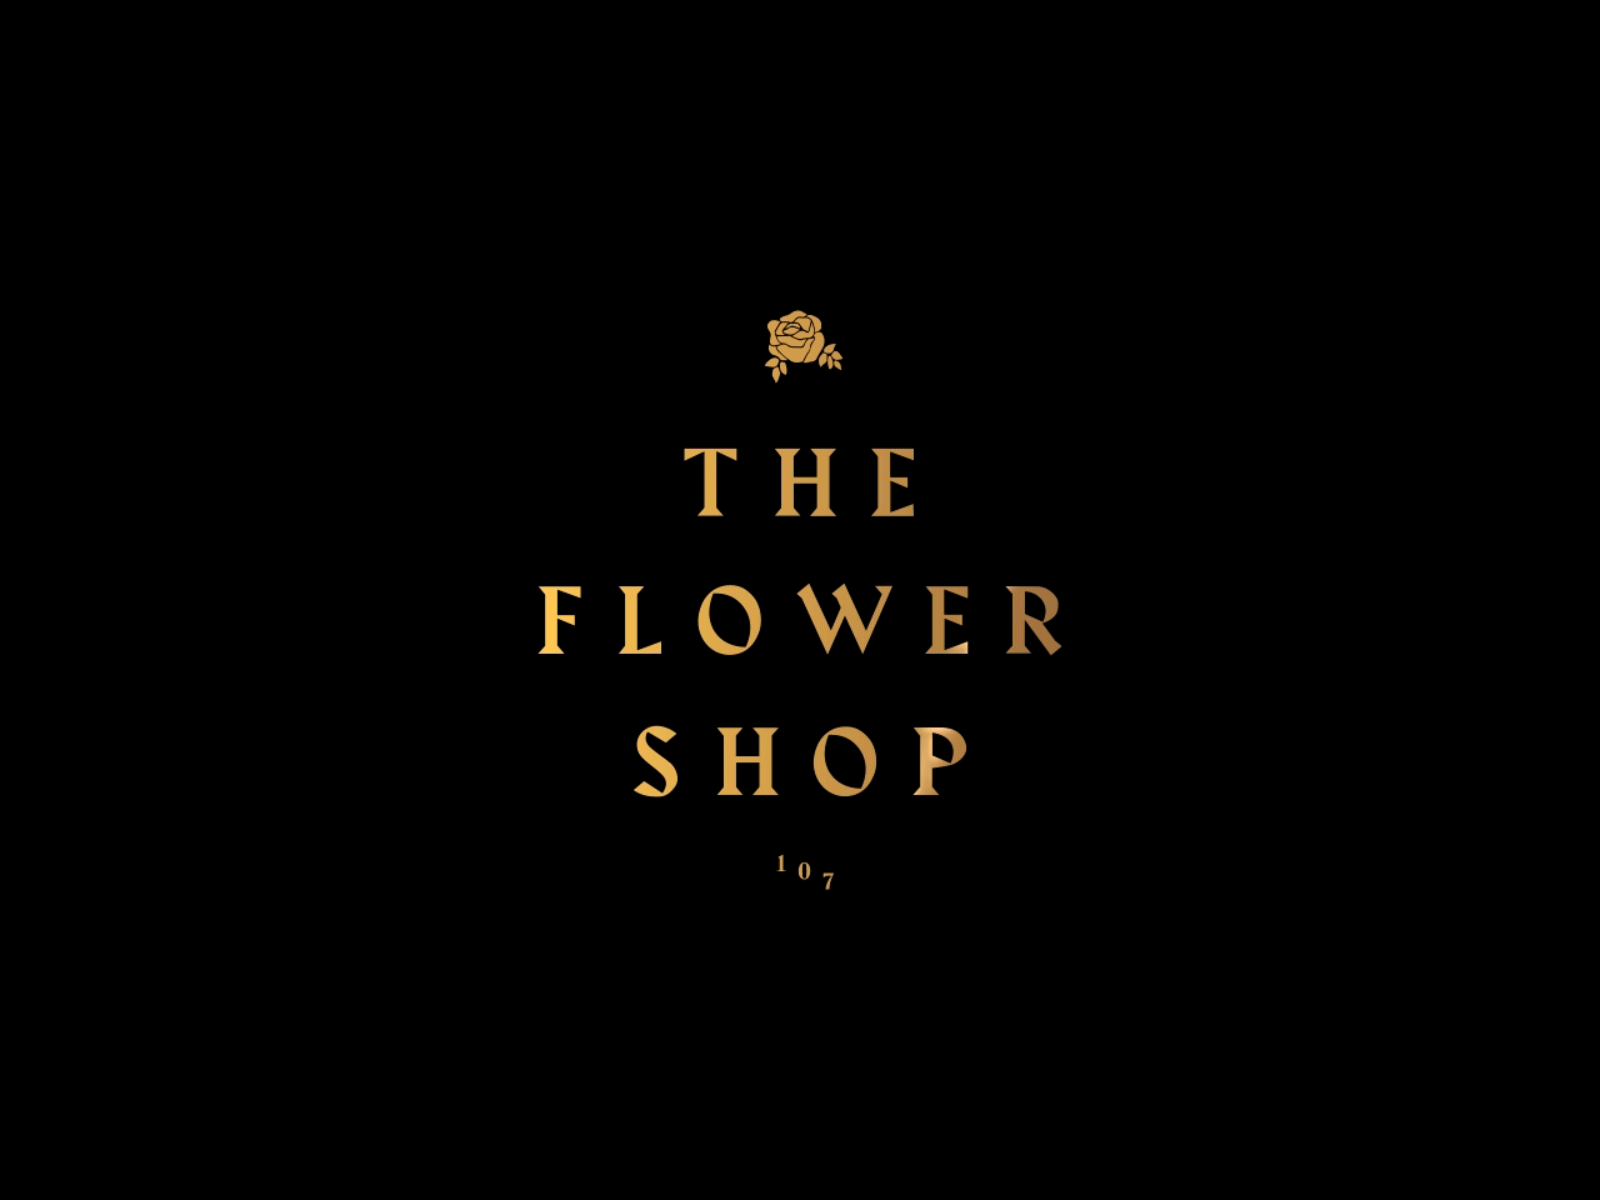 The Flower Shop logo animation